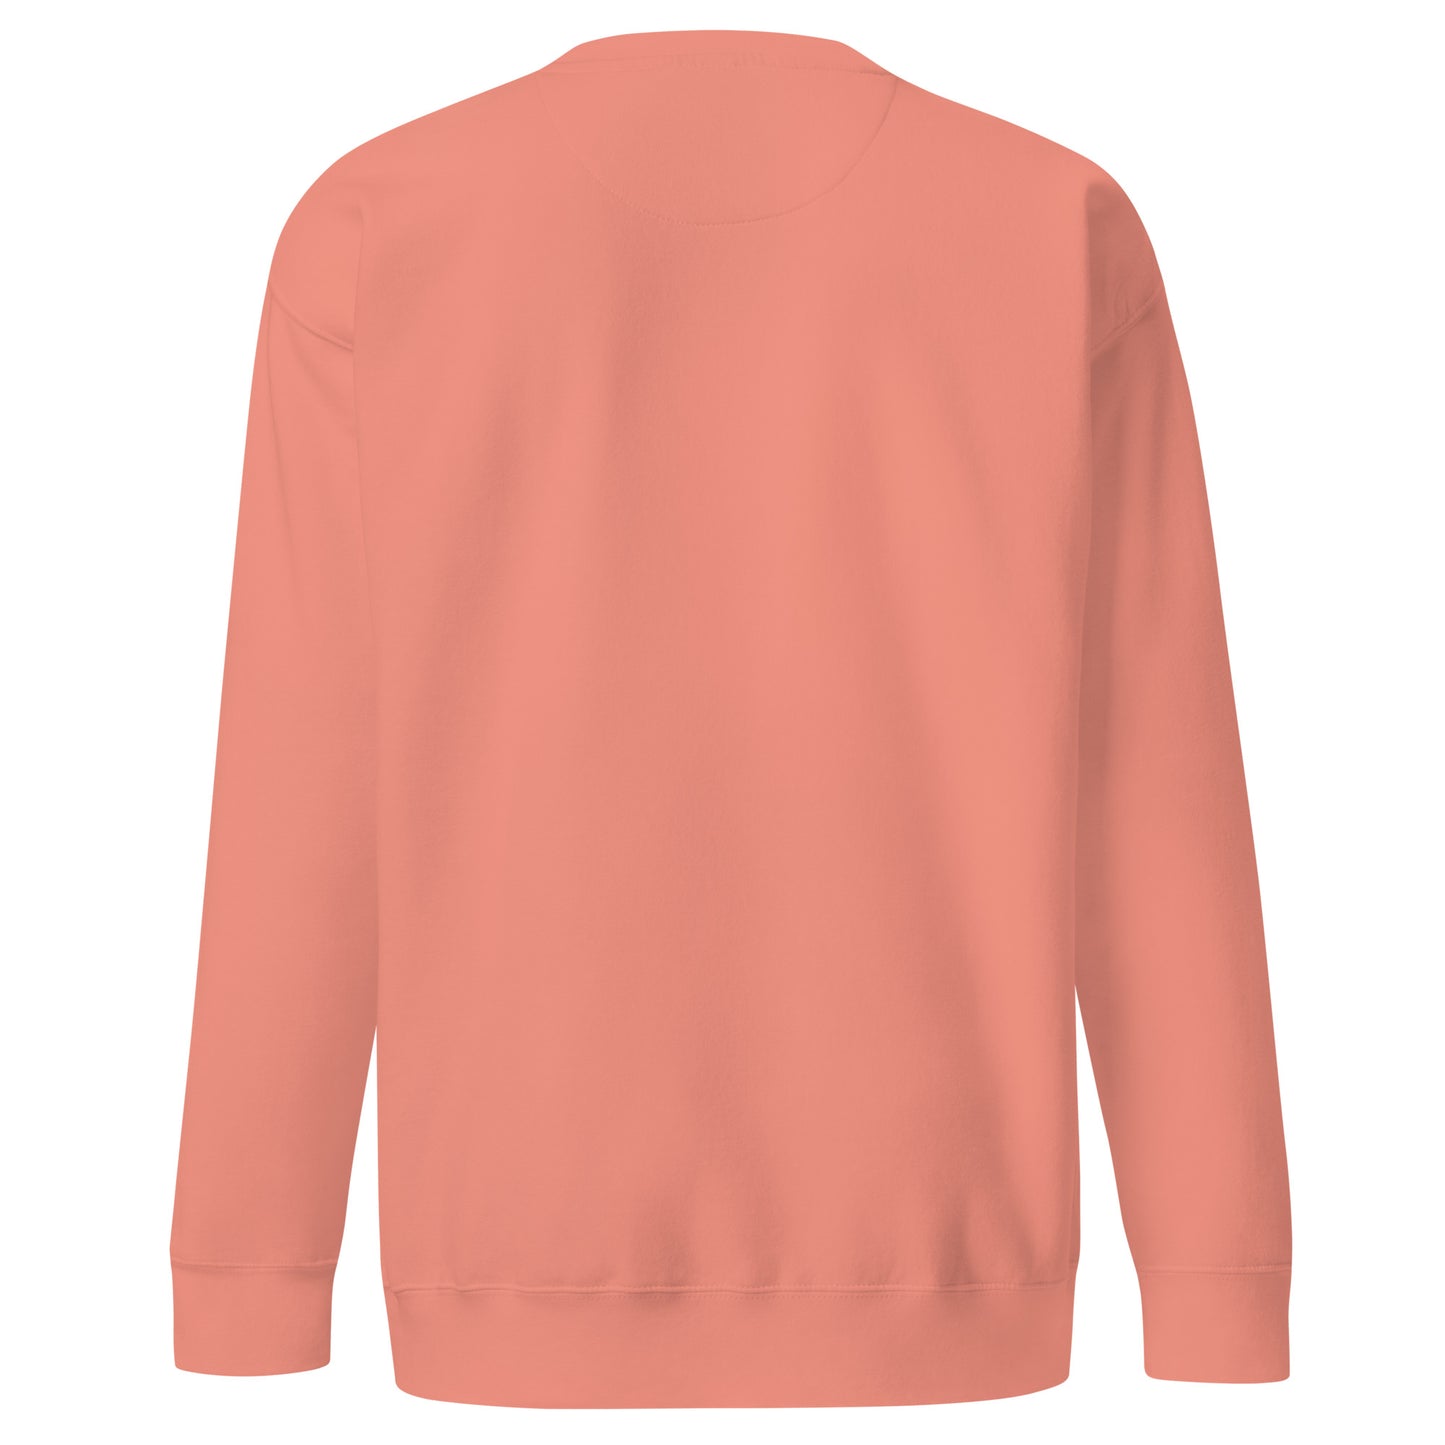 FMAC (Black) - Unisex Premium Sweatshirt